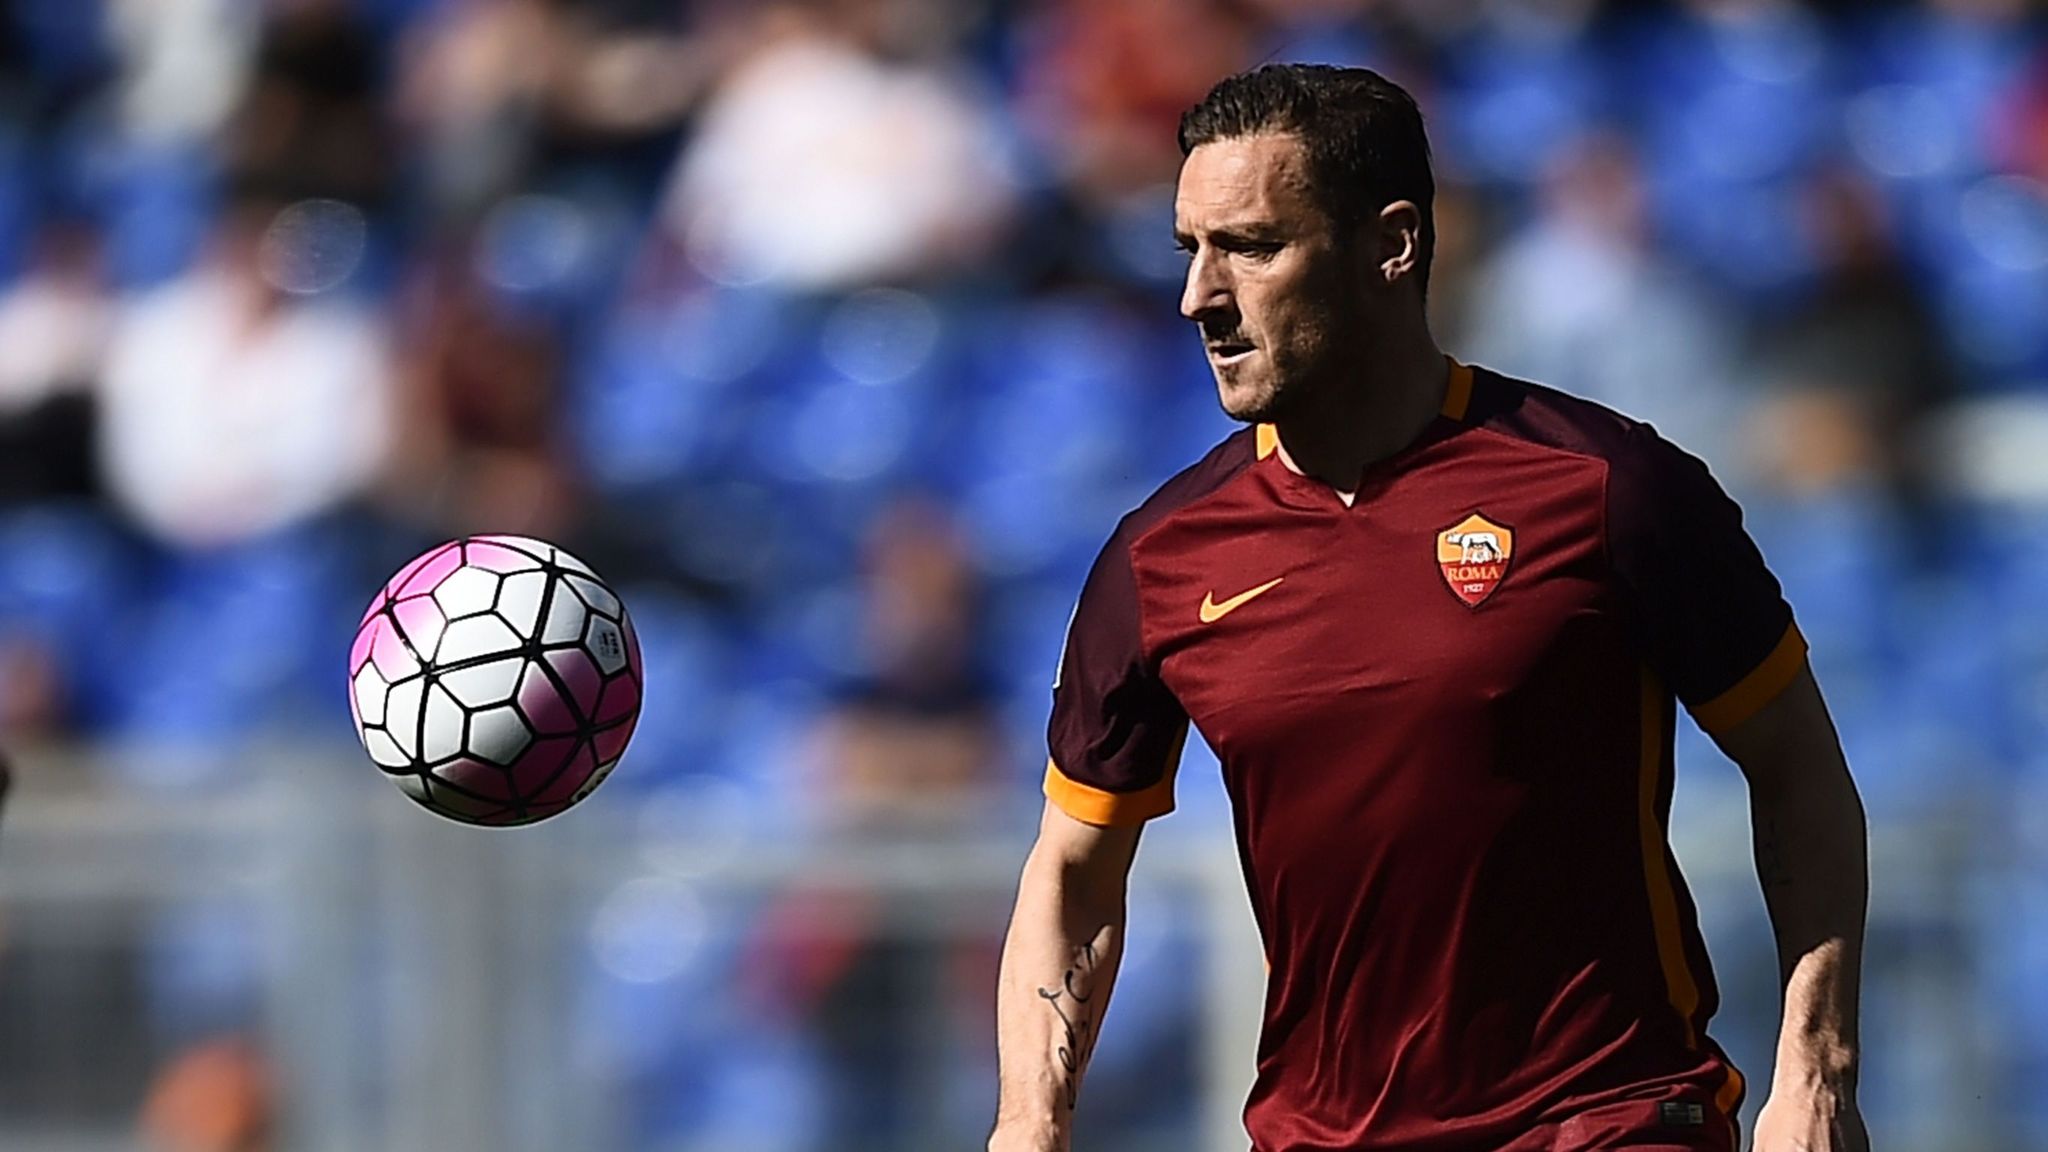 Roma's forward Francesco Totti eyes the ball during the Italian Serie A football match AS Roma vs Napoli